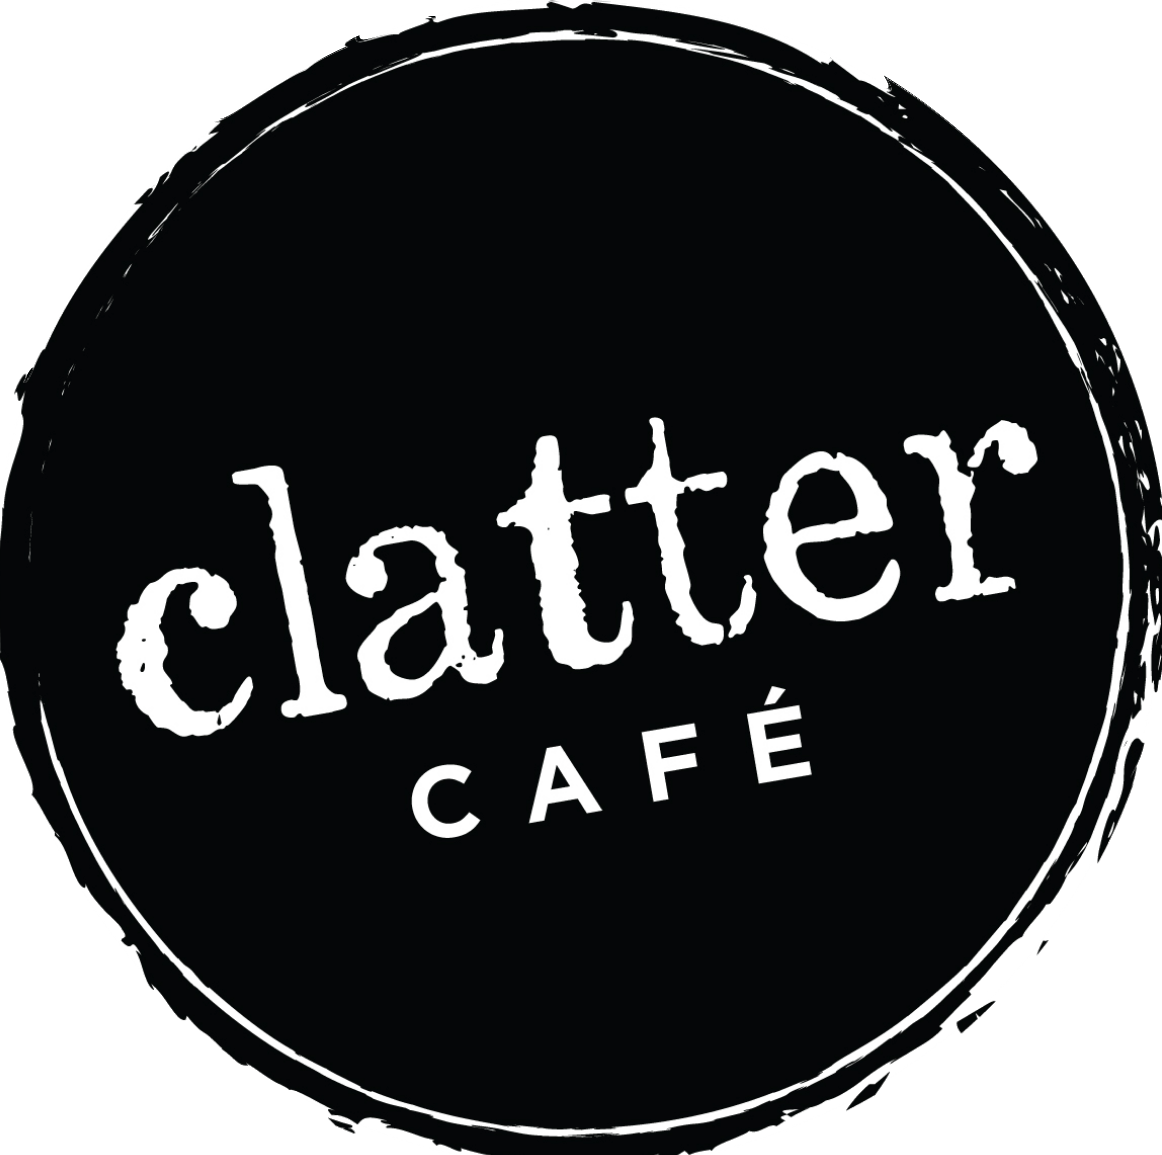 Clatter Coffee